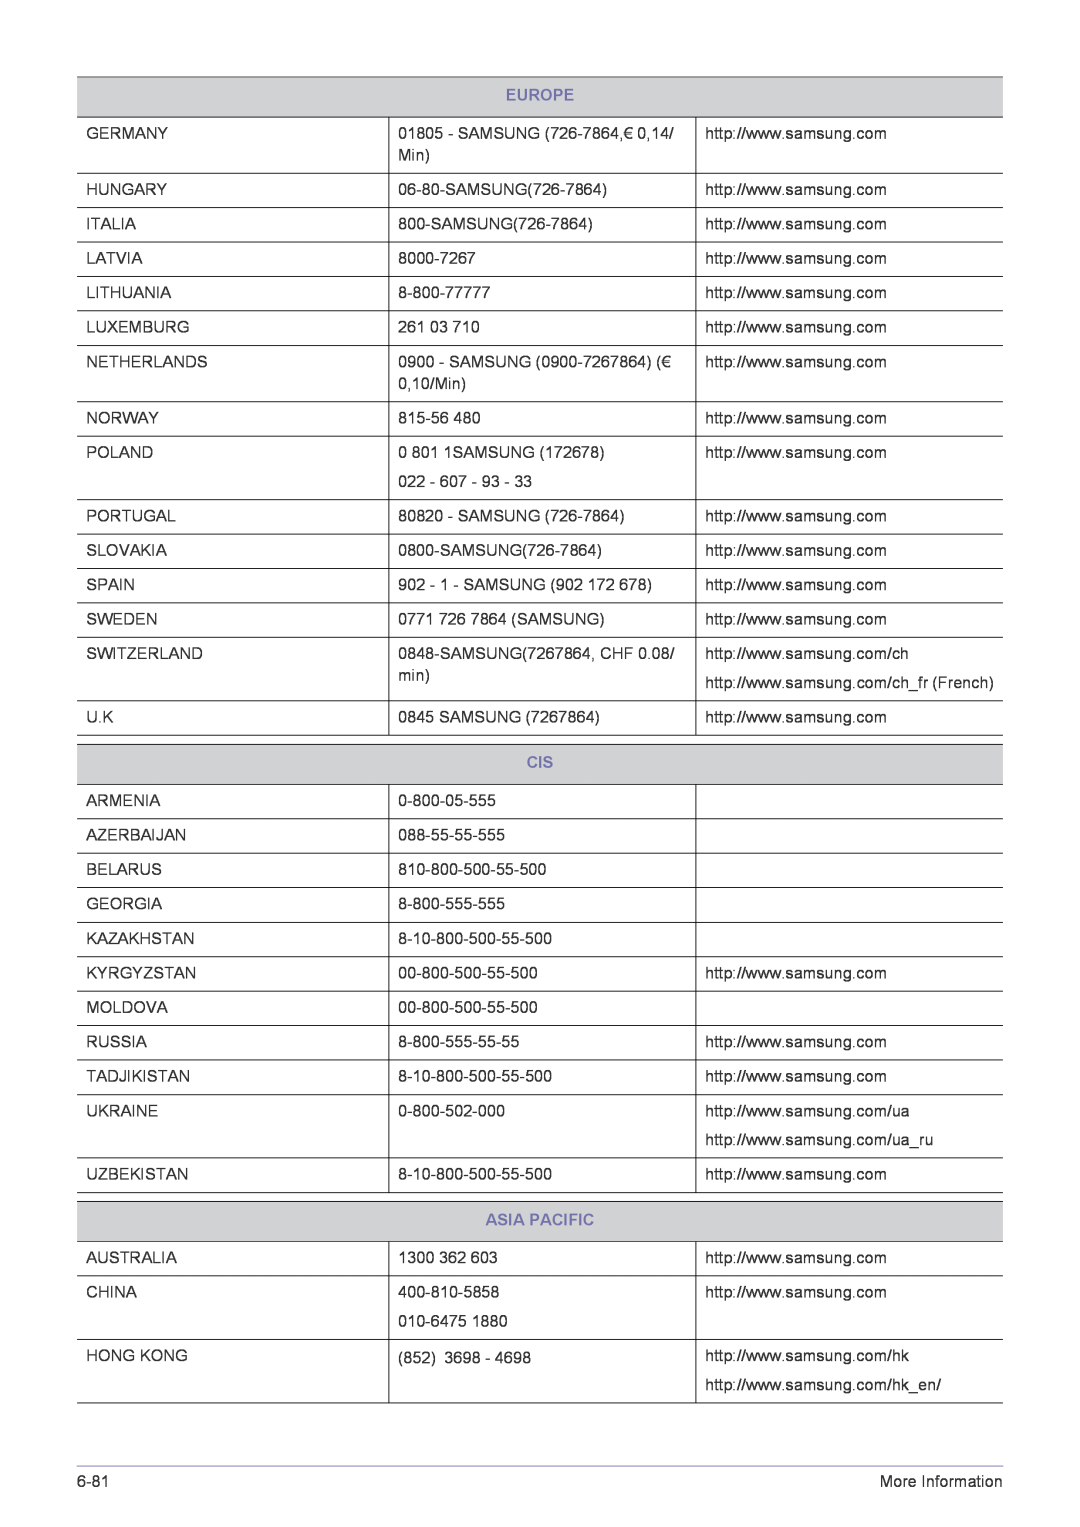 Samsung B2240MWX user manual Europe, Asia Pacific 